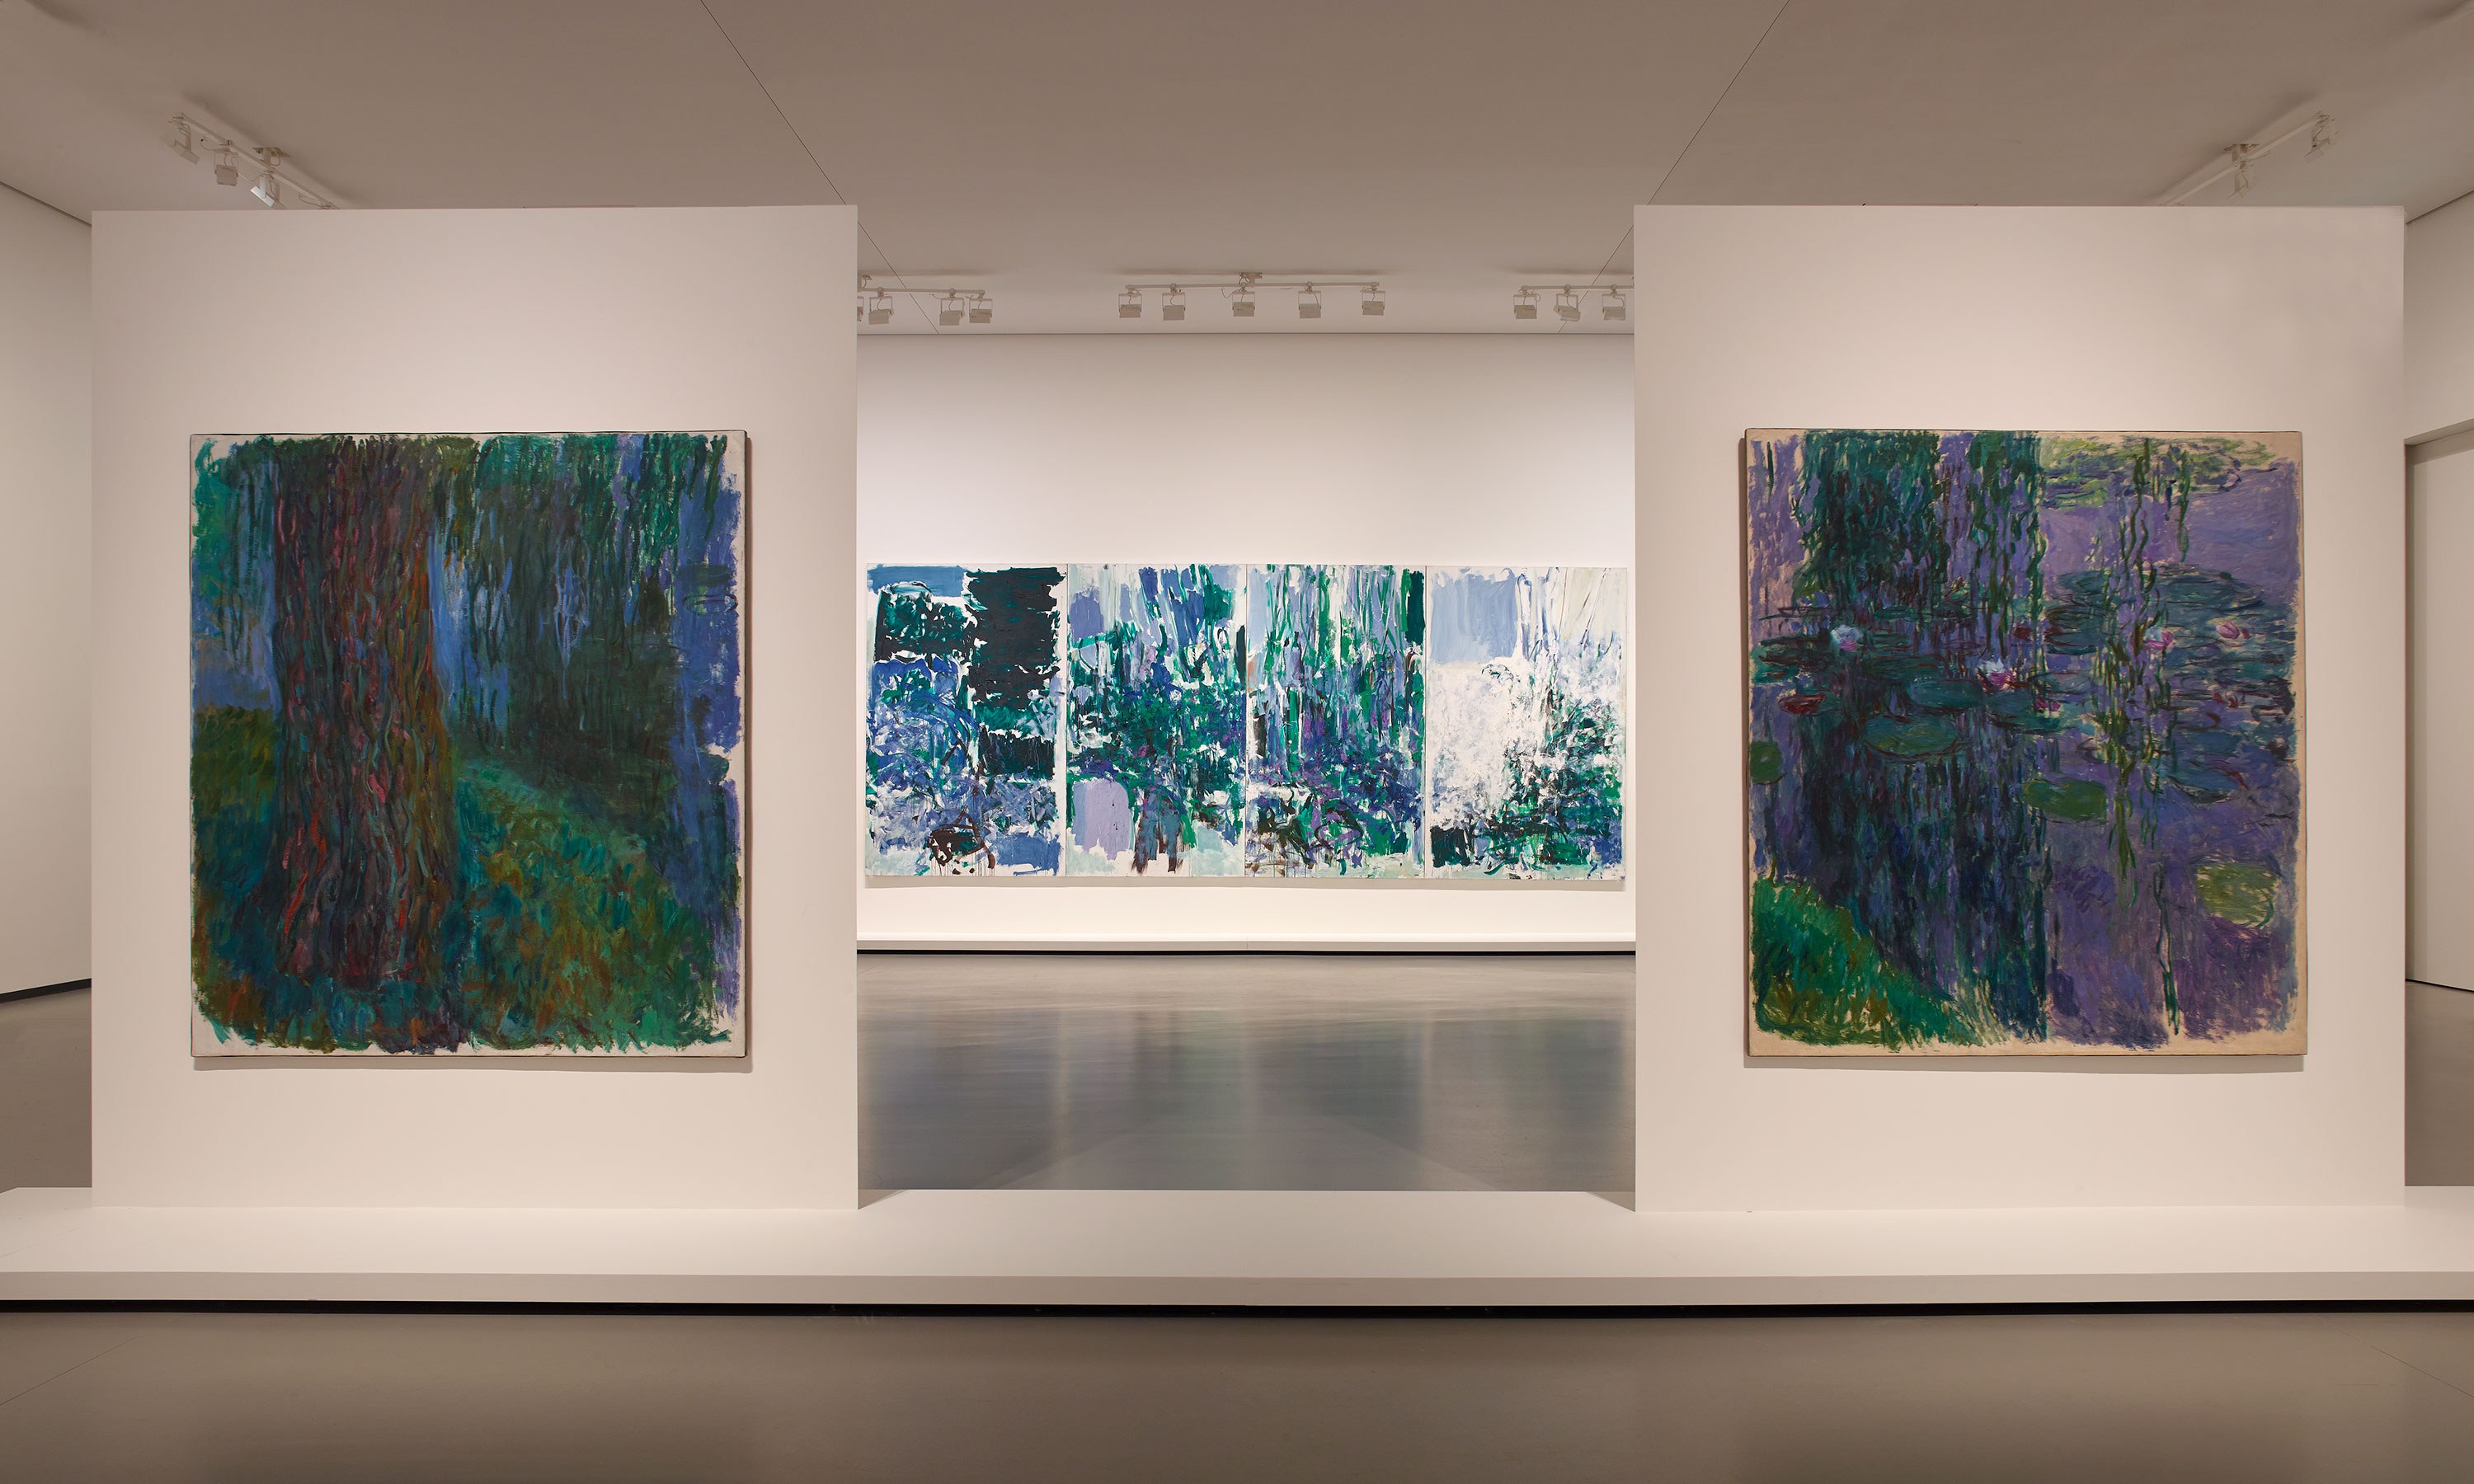 Monet - Mitchell and Joan Mitchell…